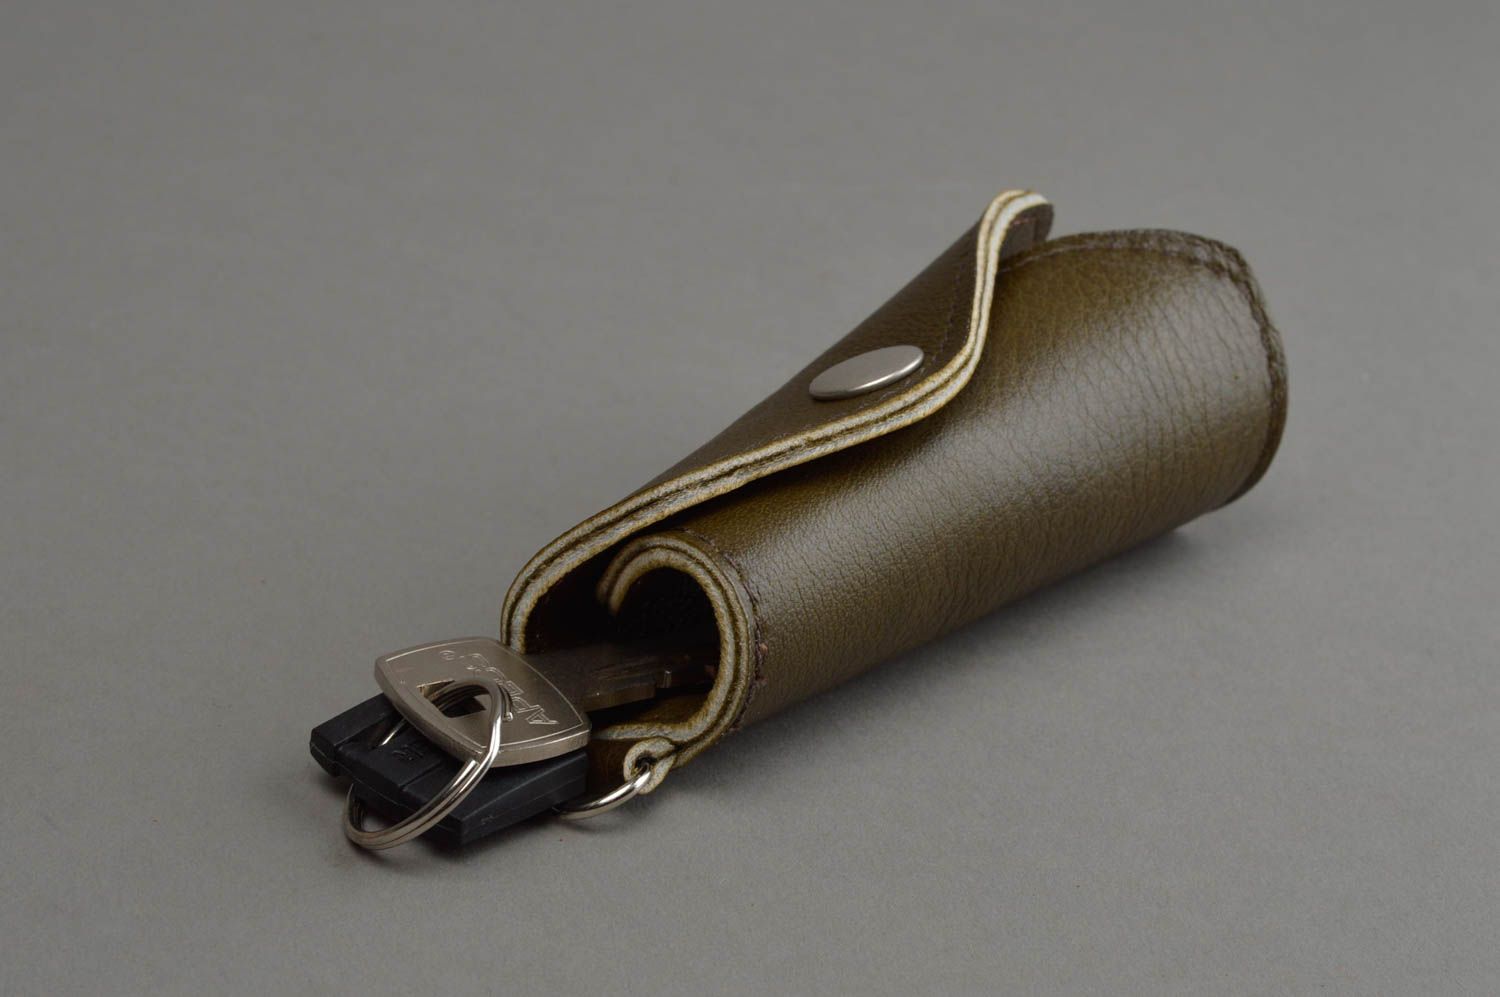 Unusual handmade leather key case designer key purse leather goods ideas photo 1